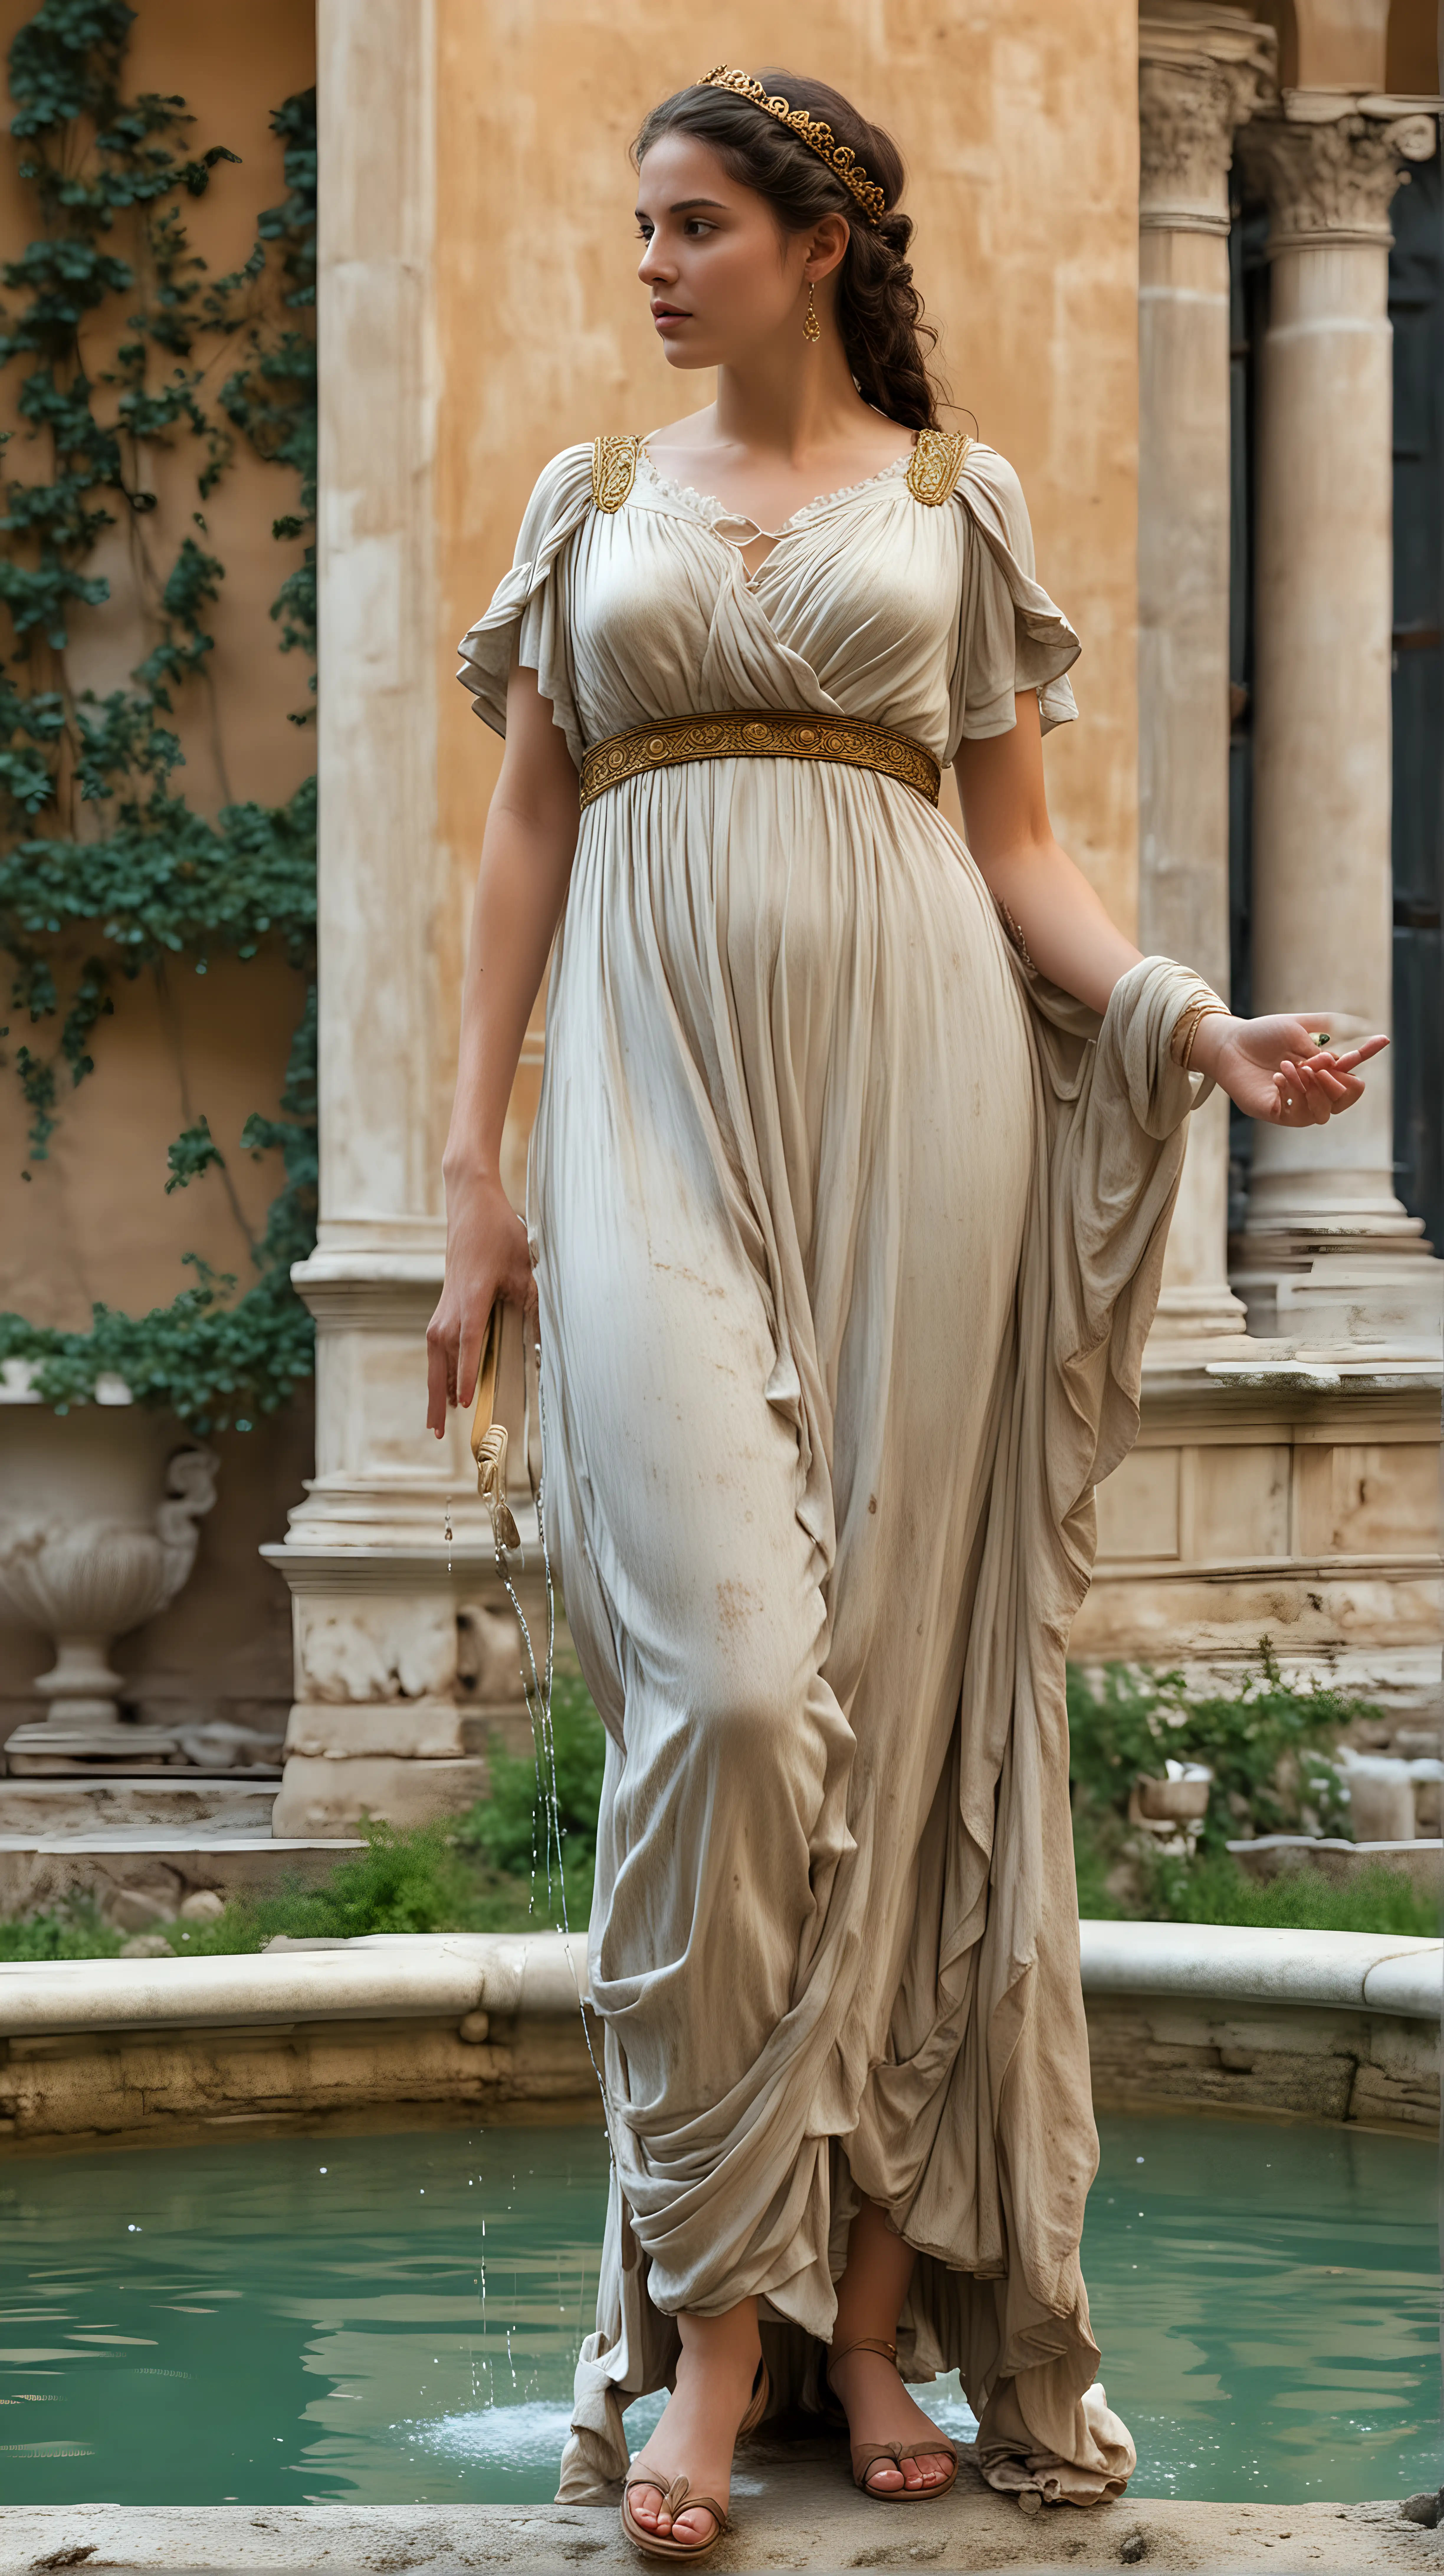 Young Roman Aristocrat Admiring Villa Fountain